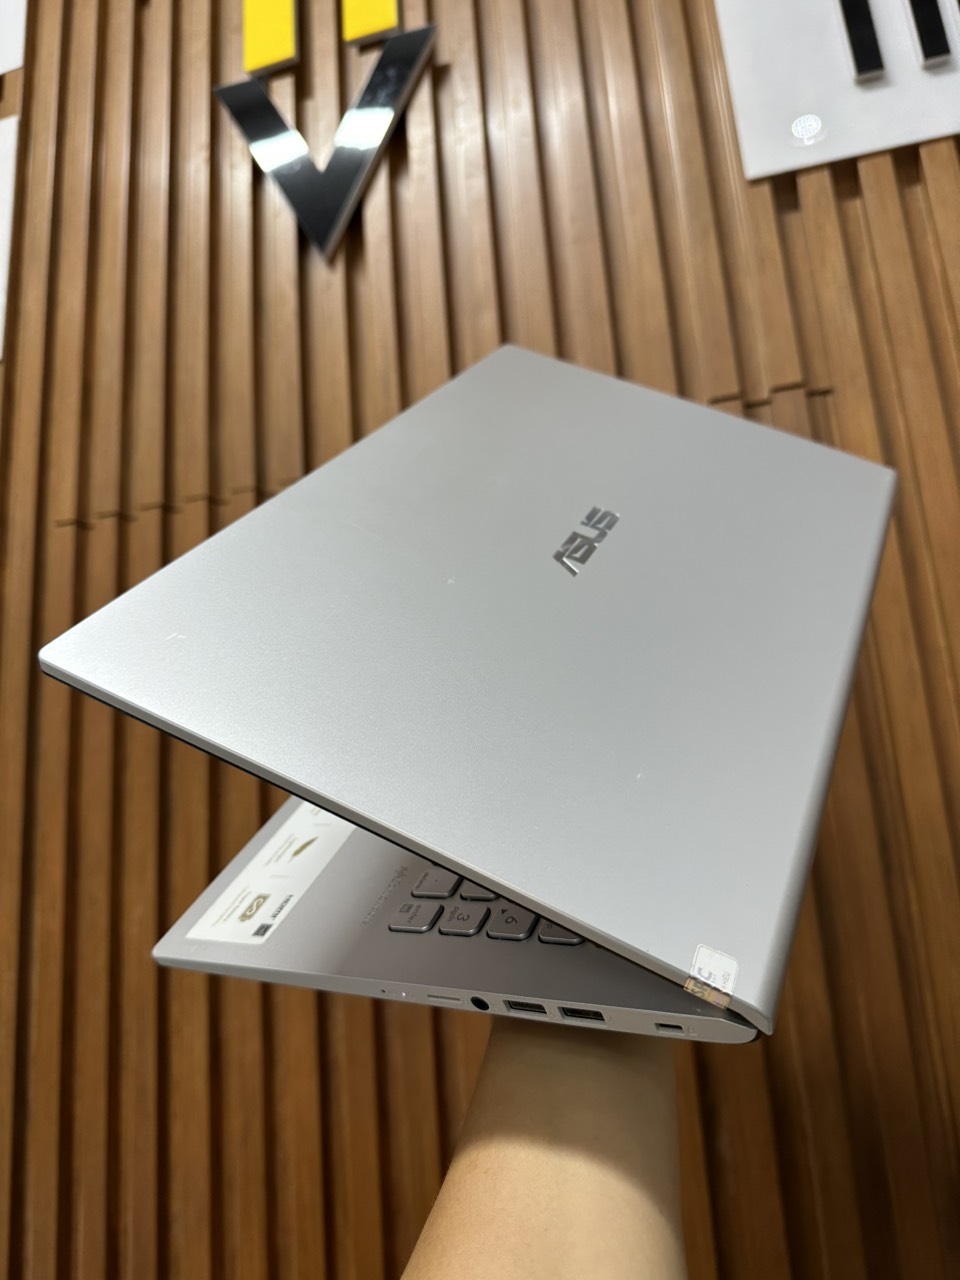 Asus Vivobook X509f Core I3 2